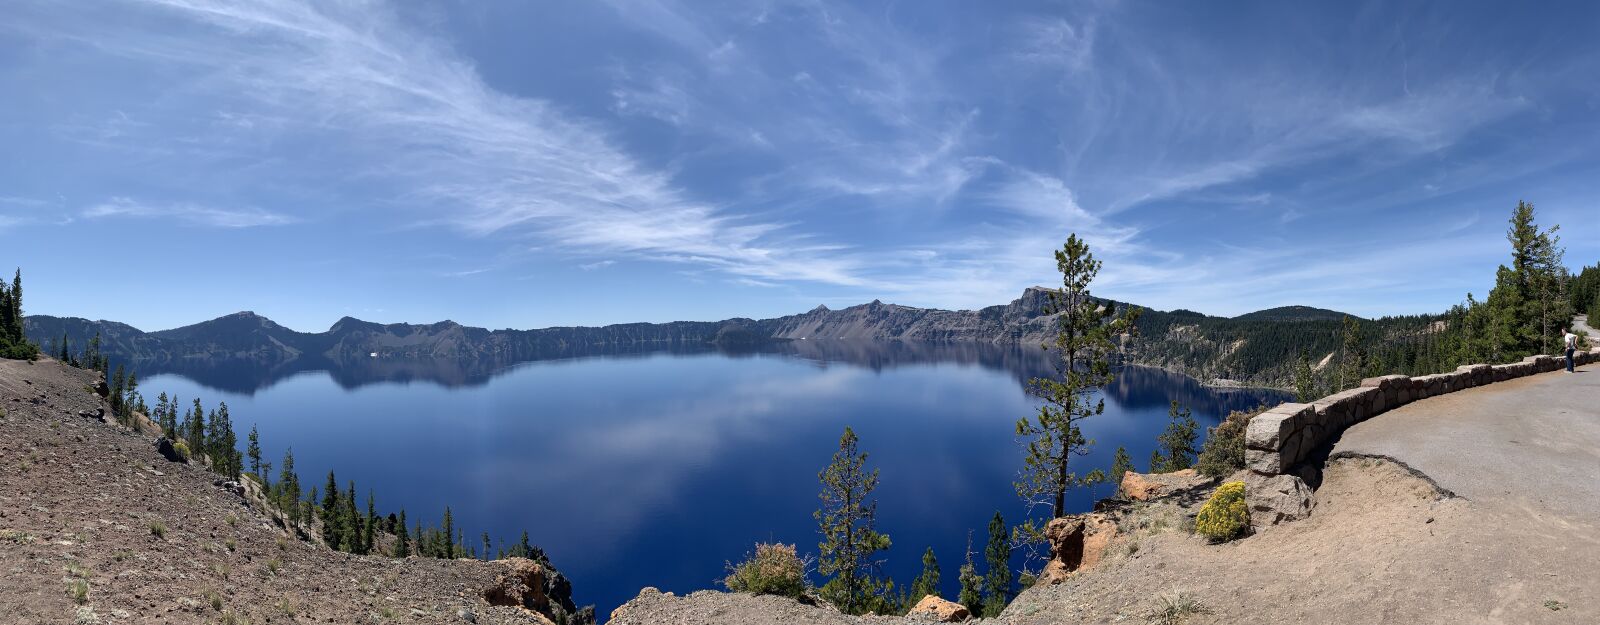 iPhone XS back camera 4.25mm f/1.8 sample photo. Lake, crater lake, oregon photography